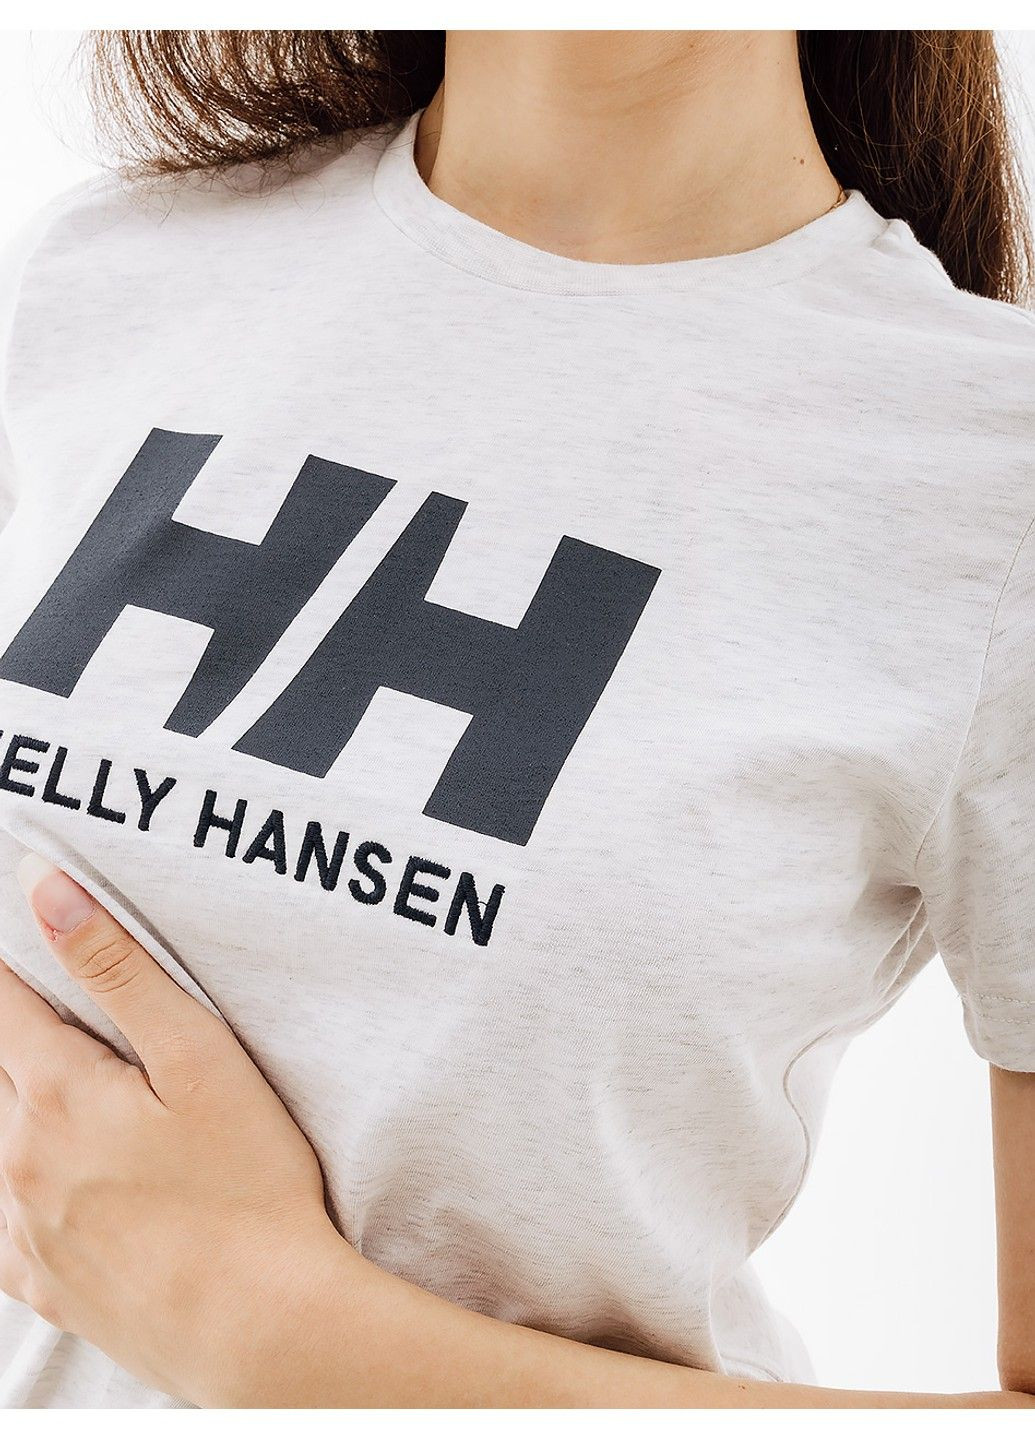 Сіра демісезон футболка w hh logo t-shirt Helly Hansen